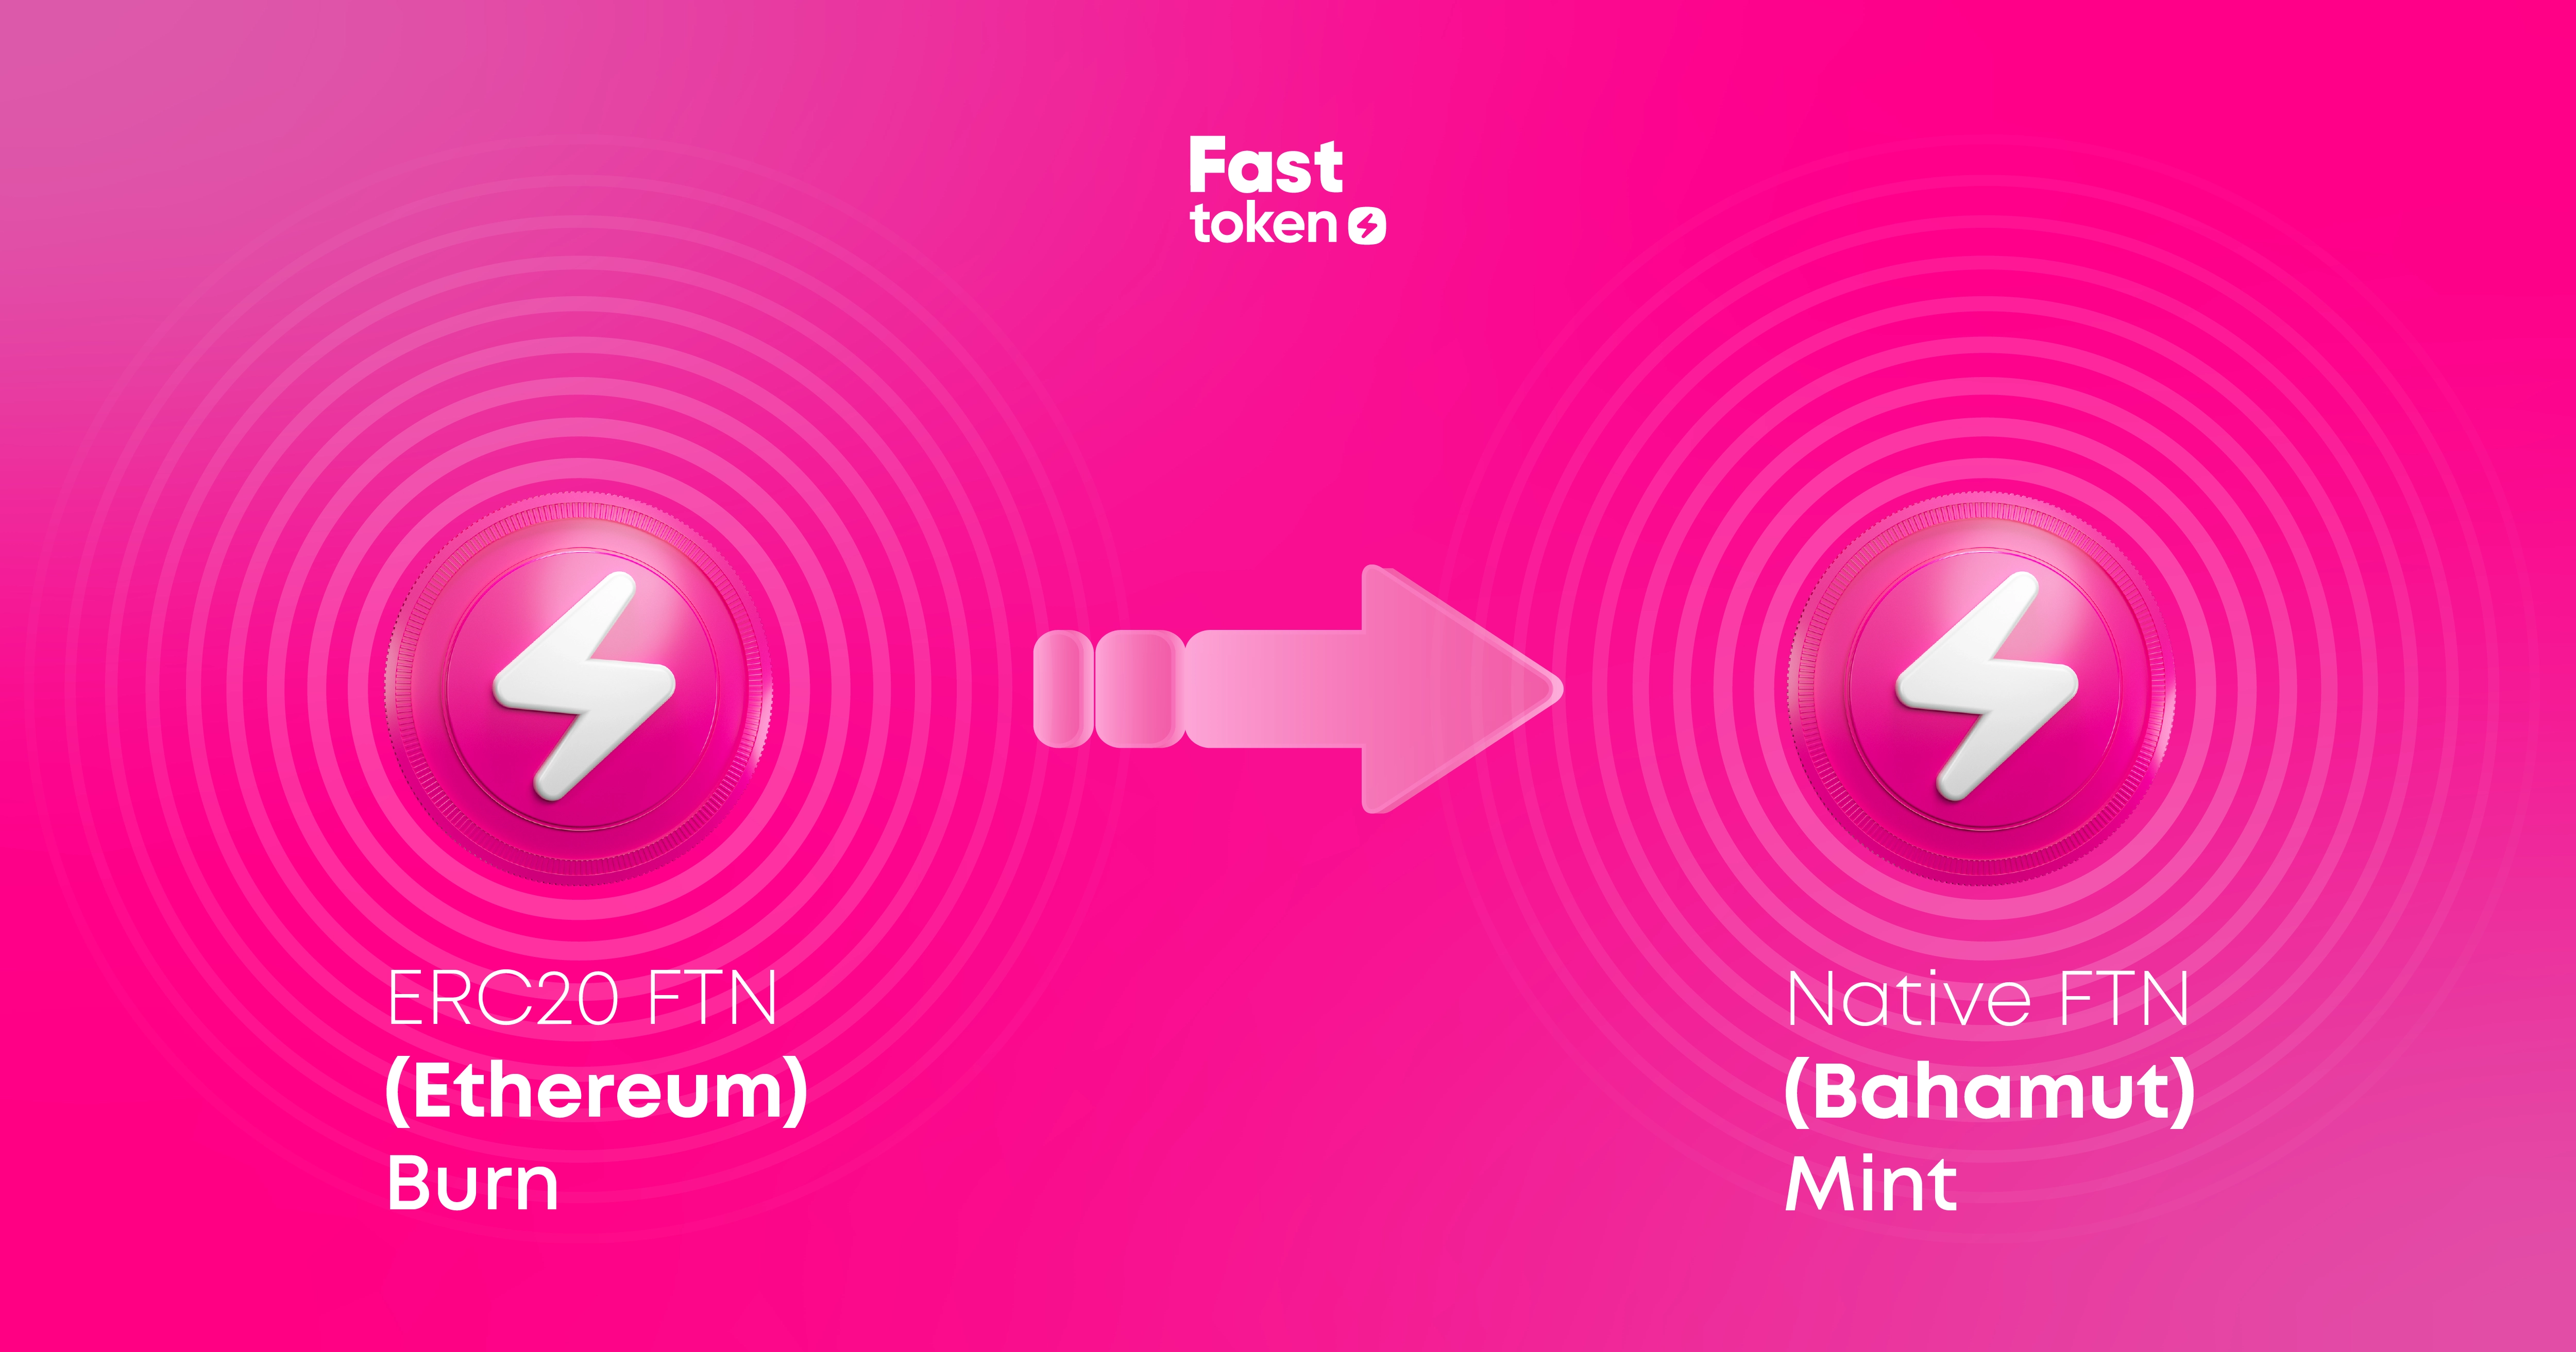 Fastex 使 Fasttoken (FTN) 所有者能够将代币从以太坊区块链转移到 Fastex Chain